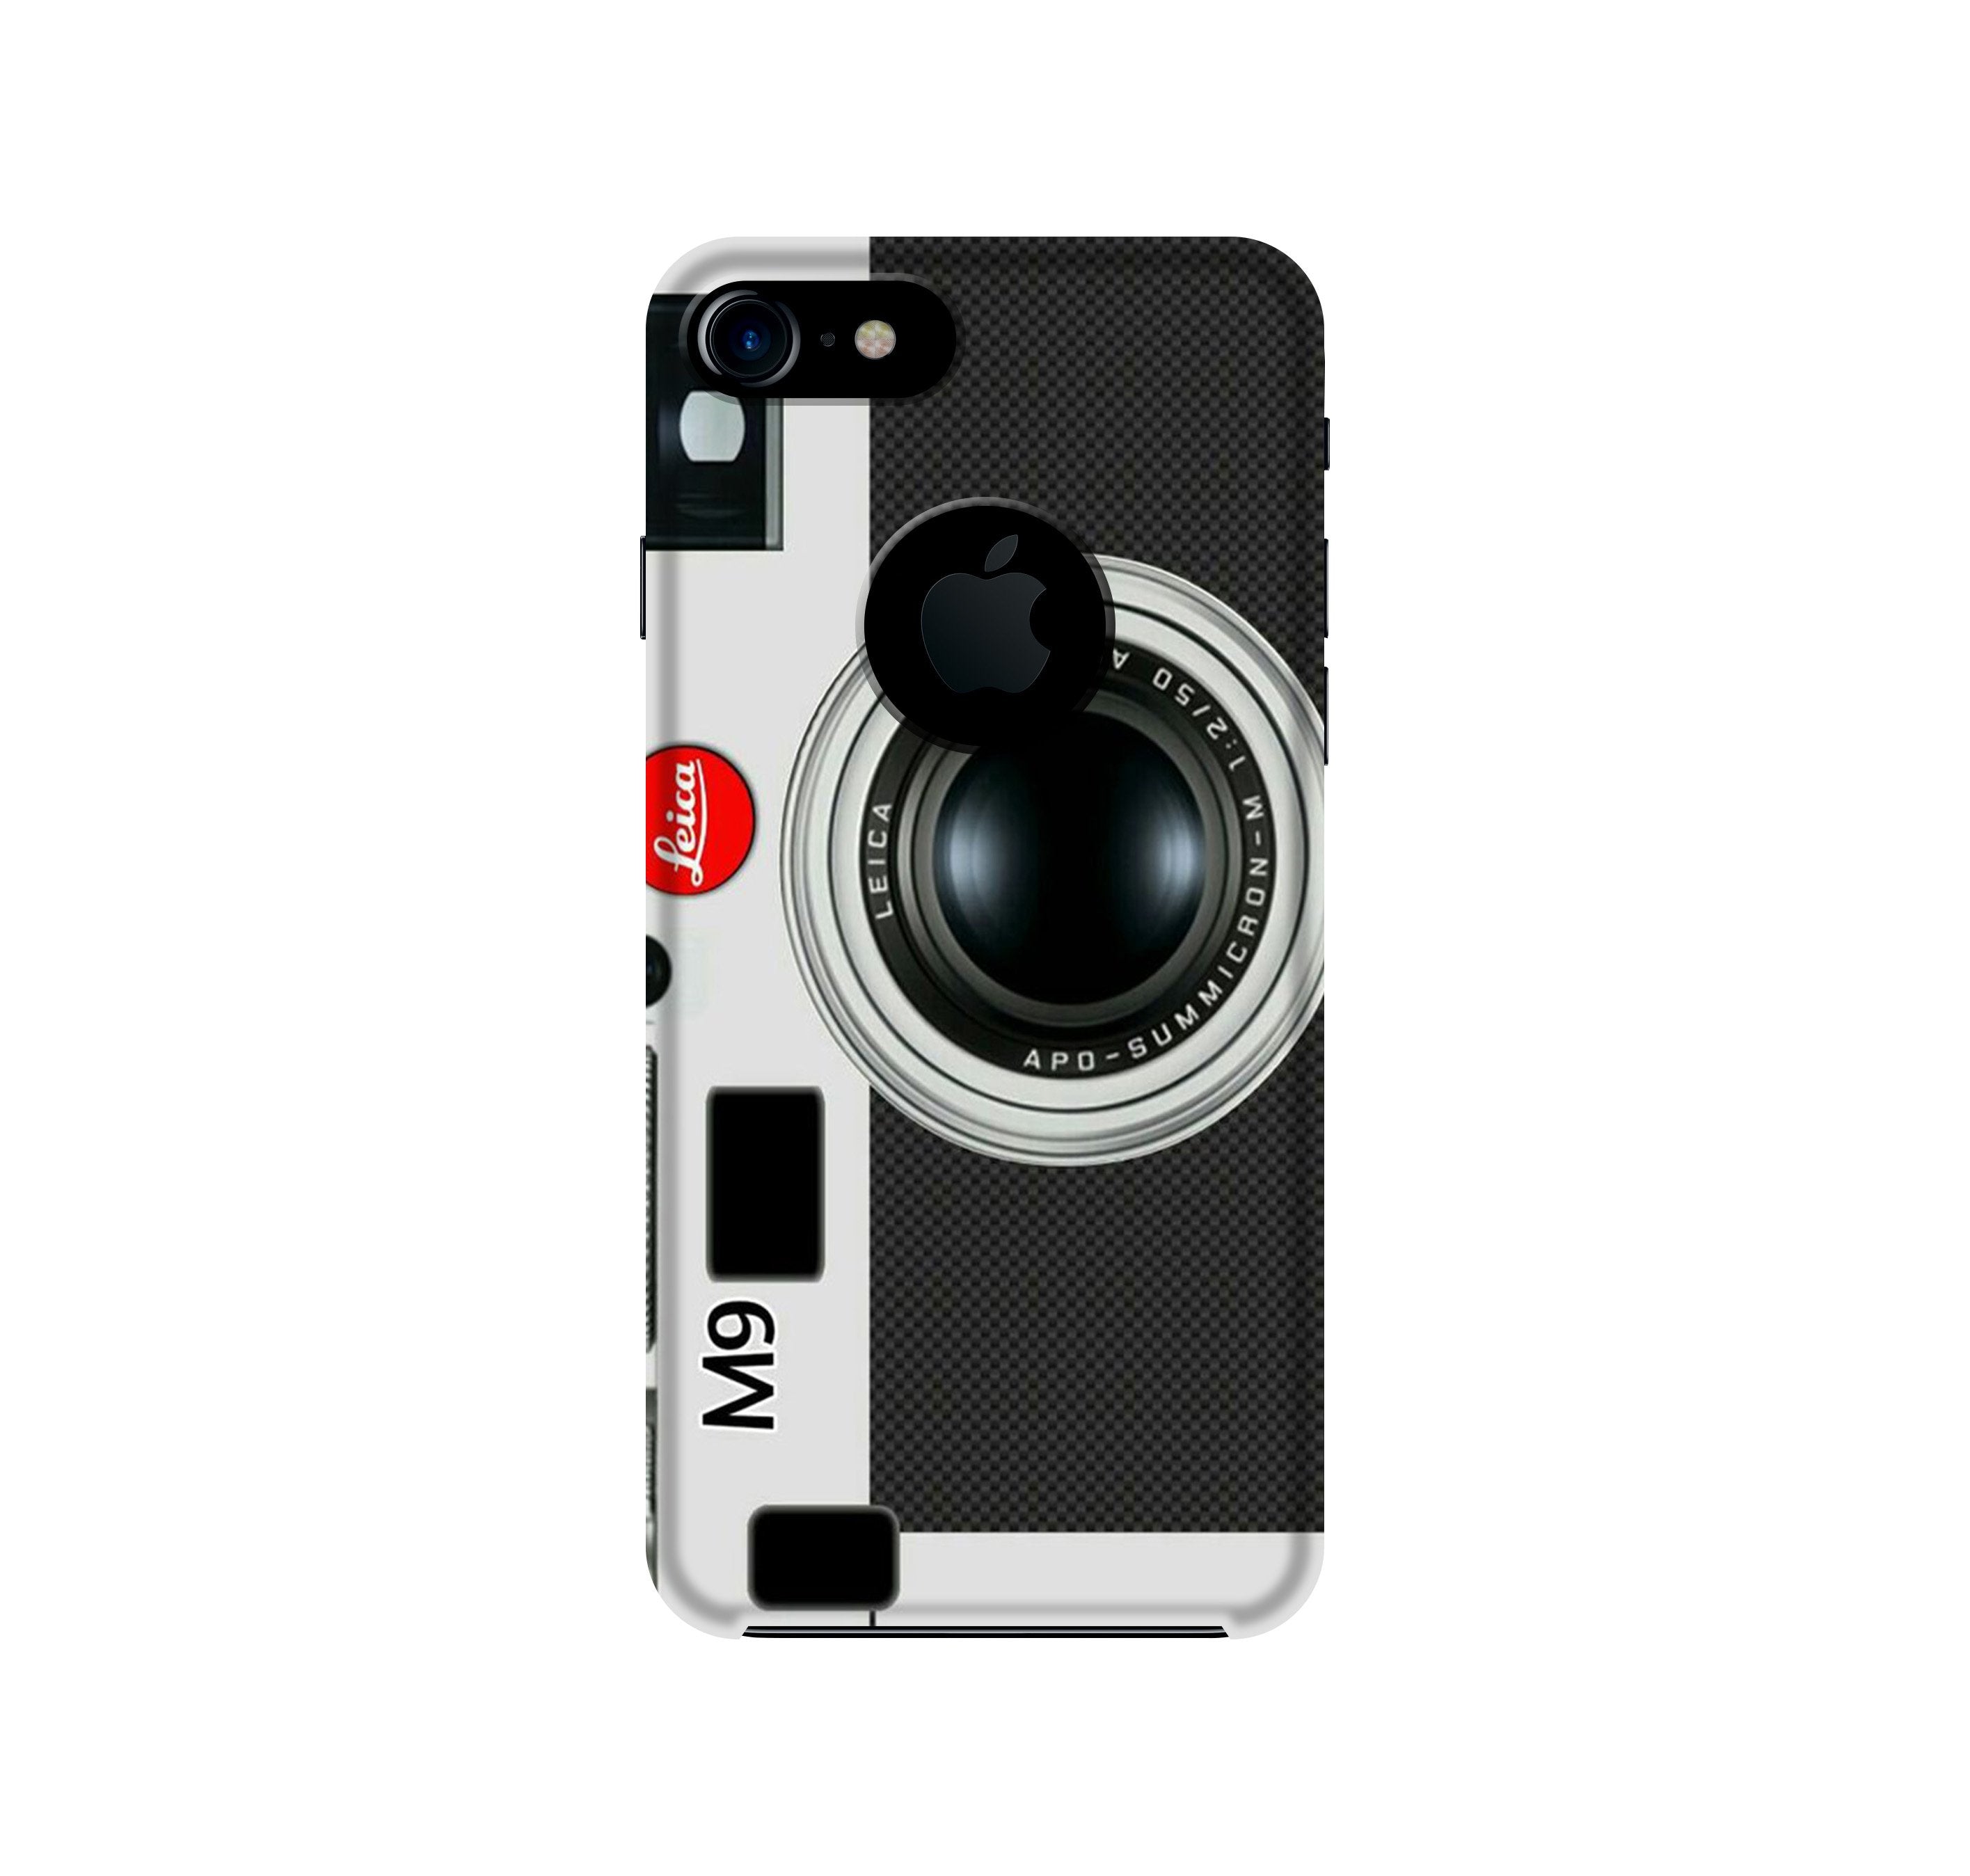 Camera Case for iPhone 7 logo cut (Design No. 257)